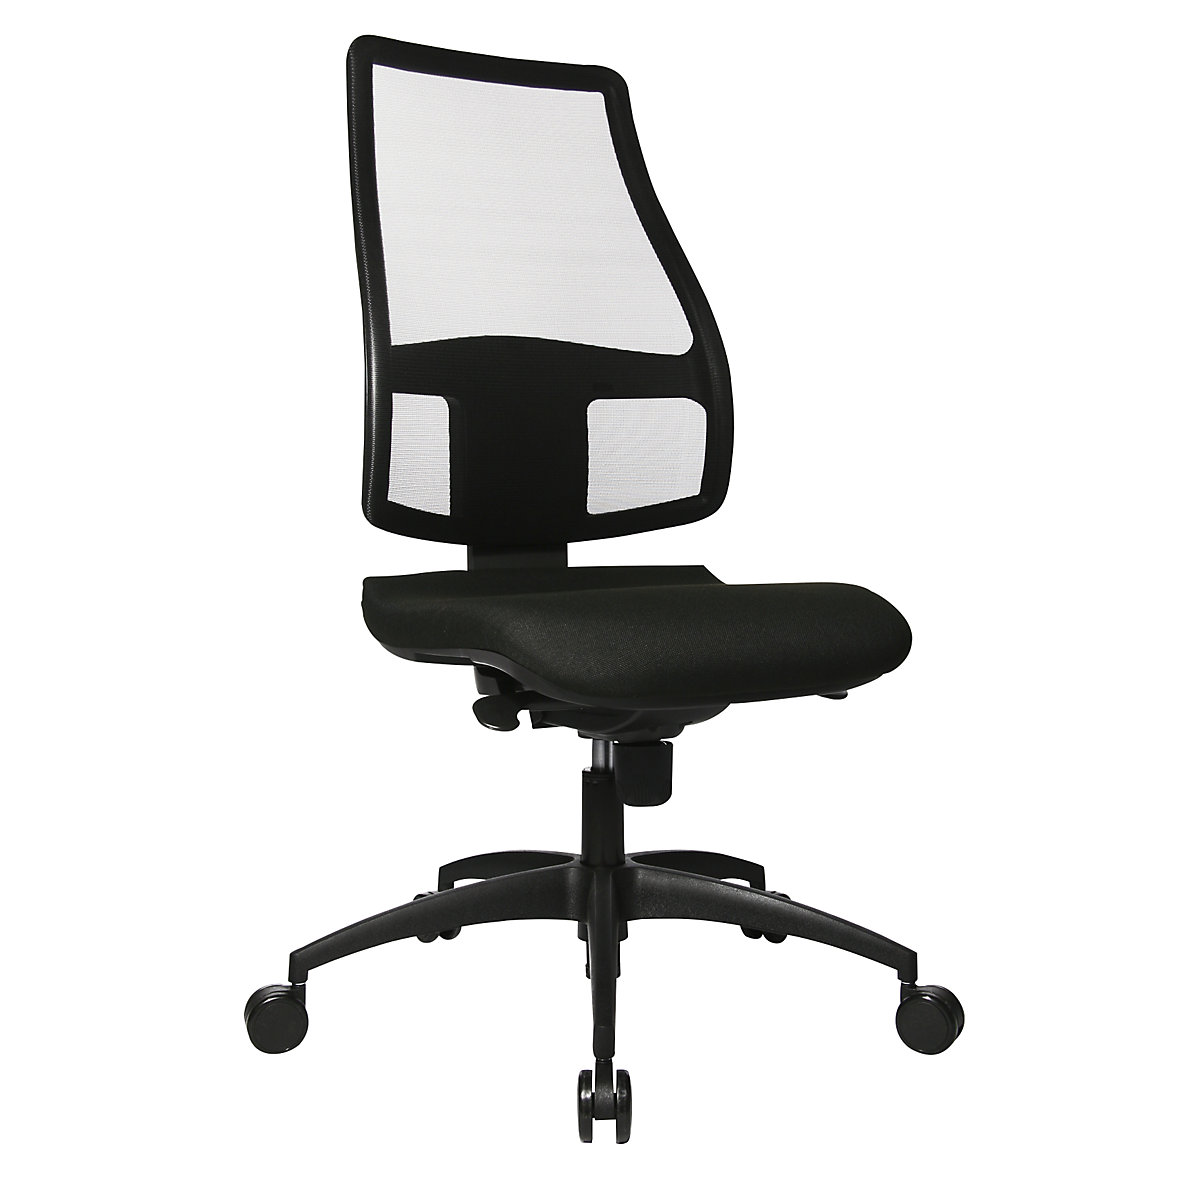 Ergonomic swivel chair, back rest height 680 mm - Topstar